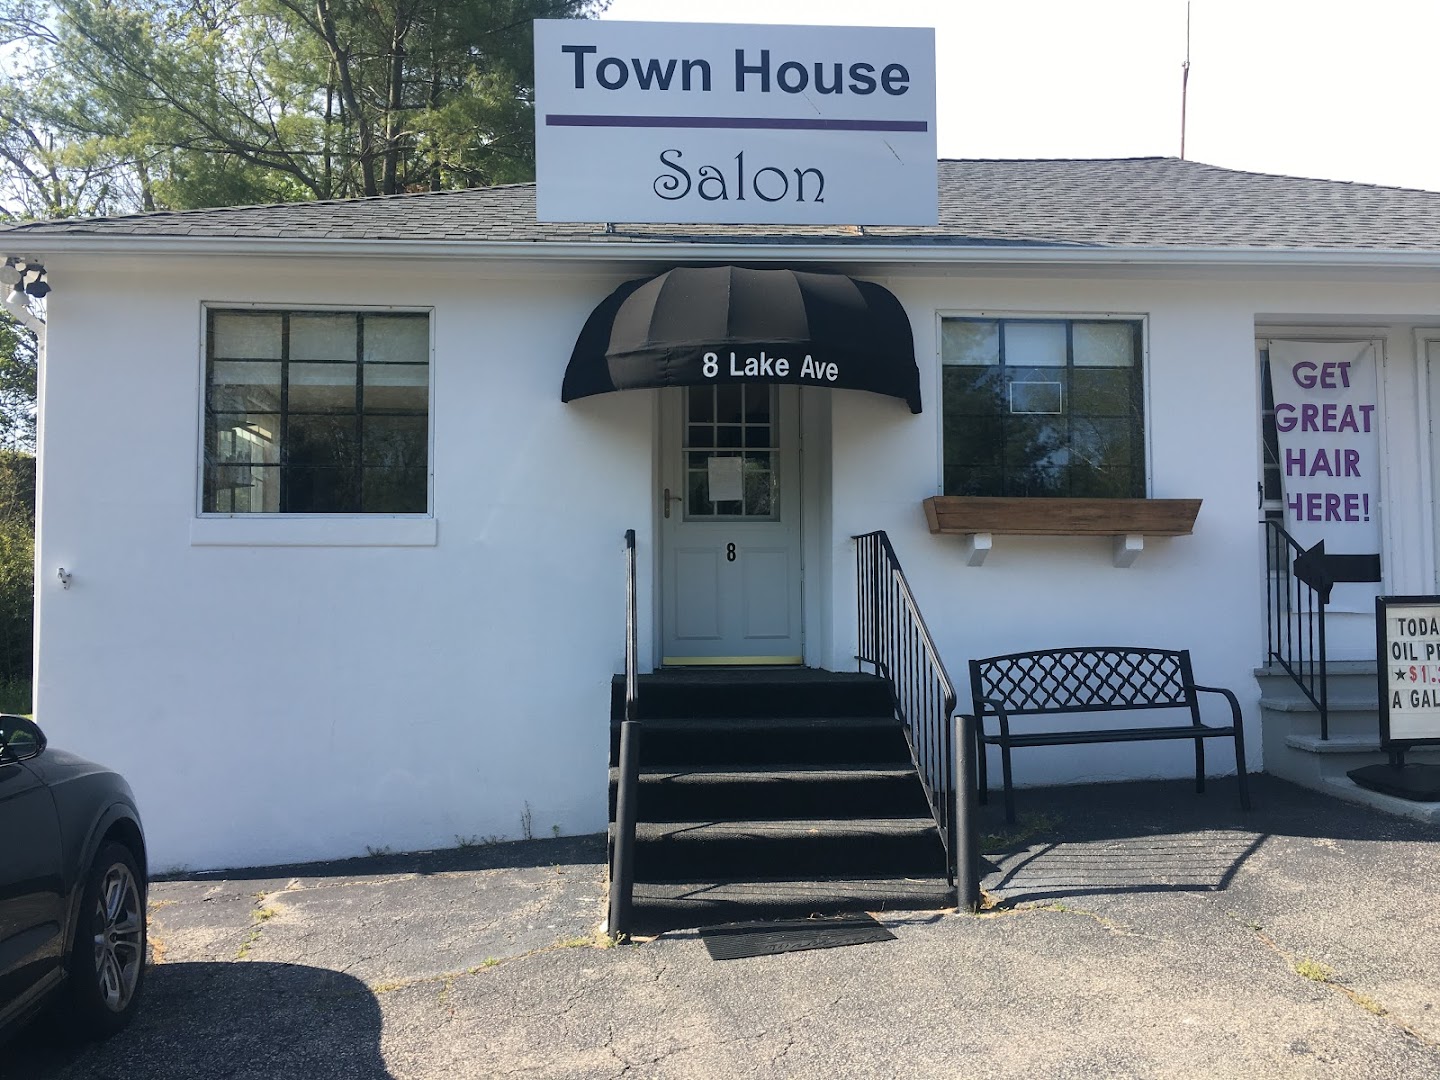 Town House Salon